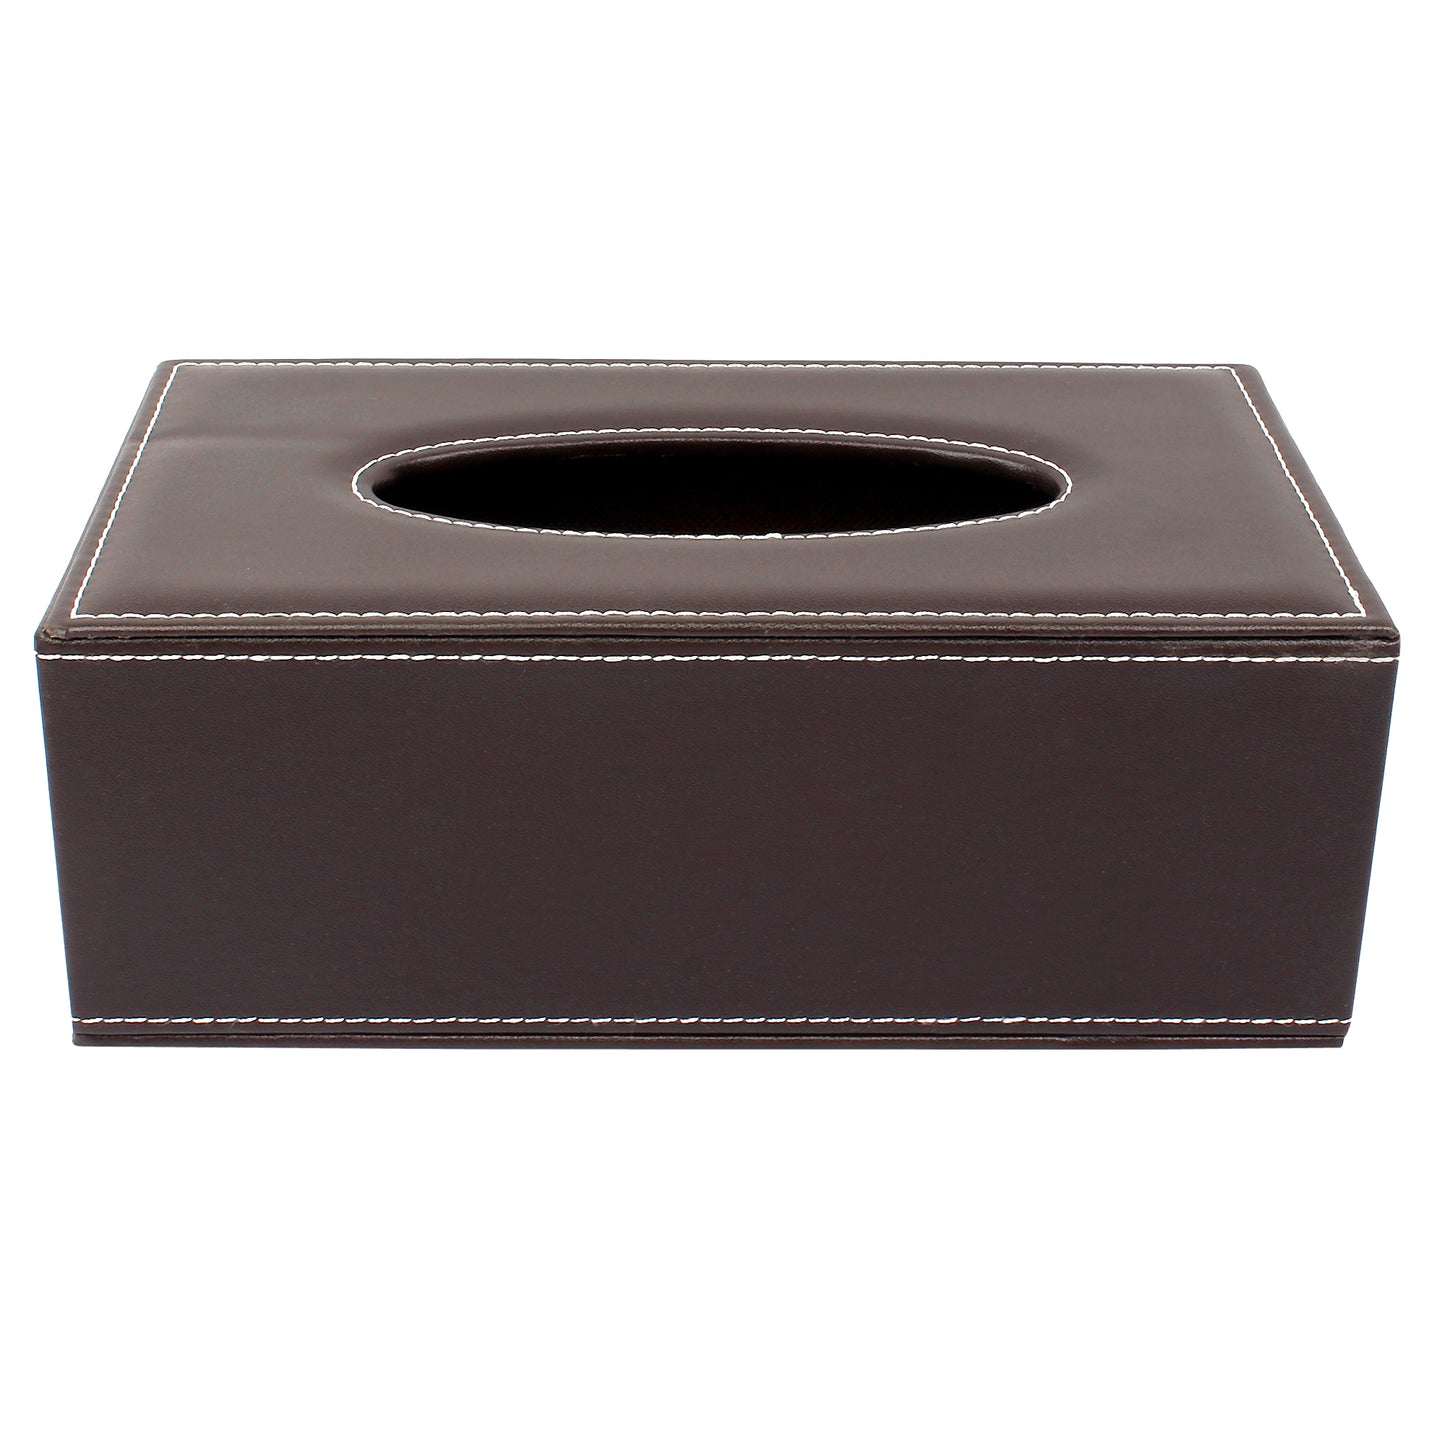 Brown Tissue box